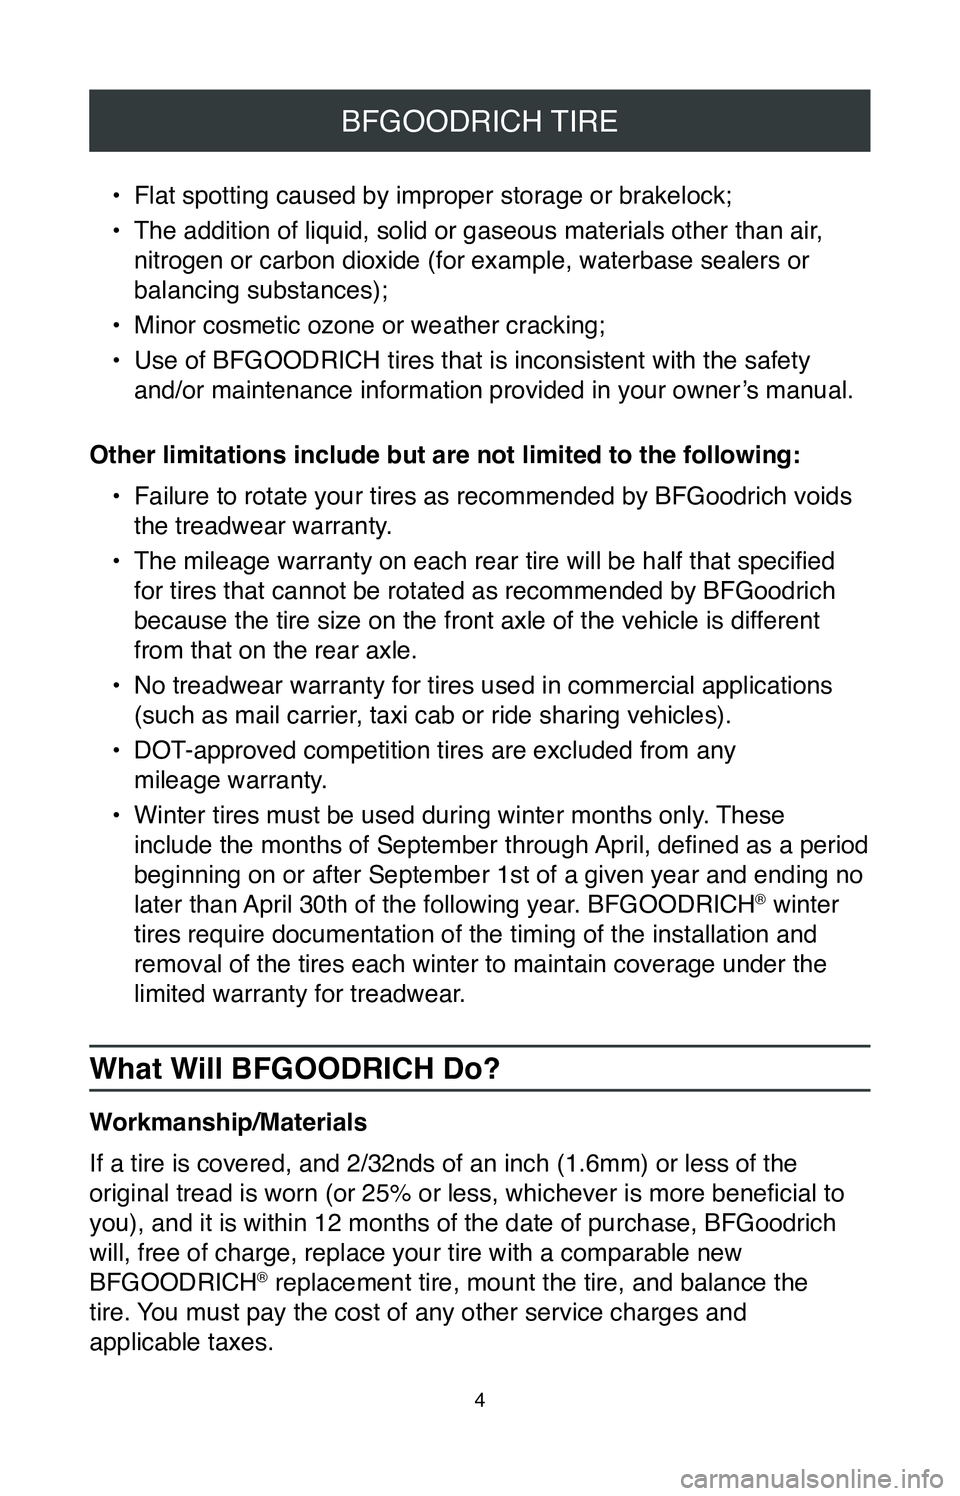 TOYOTA TUNDRA 2020  Warranties & Maintenance Guides (in English) 4
BFGOODRICH TIRE
